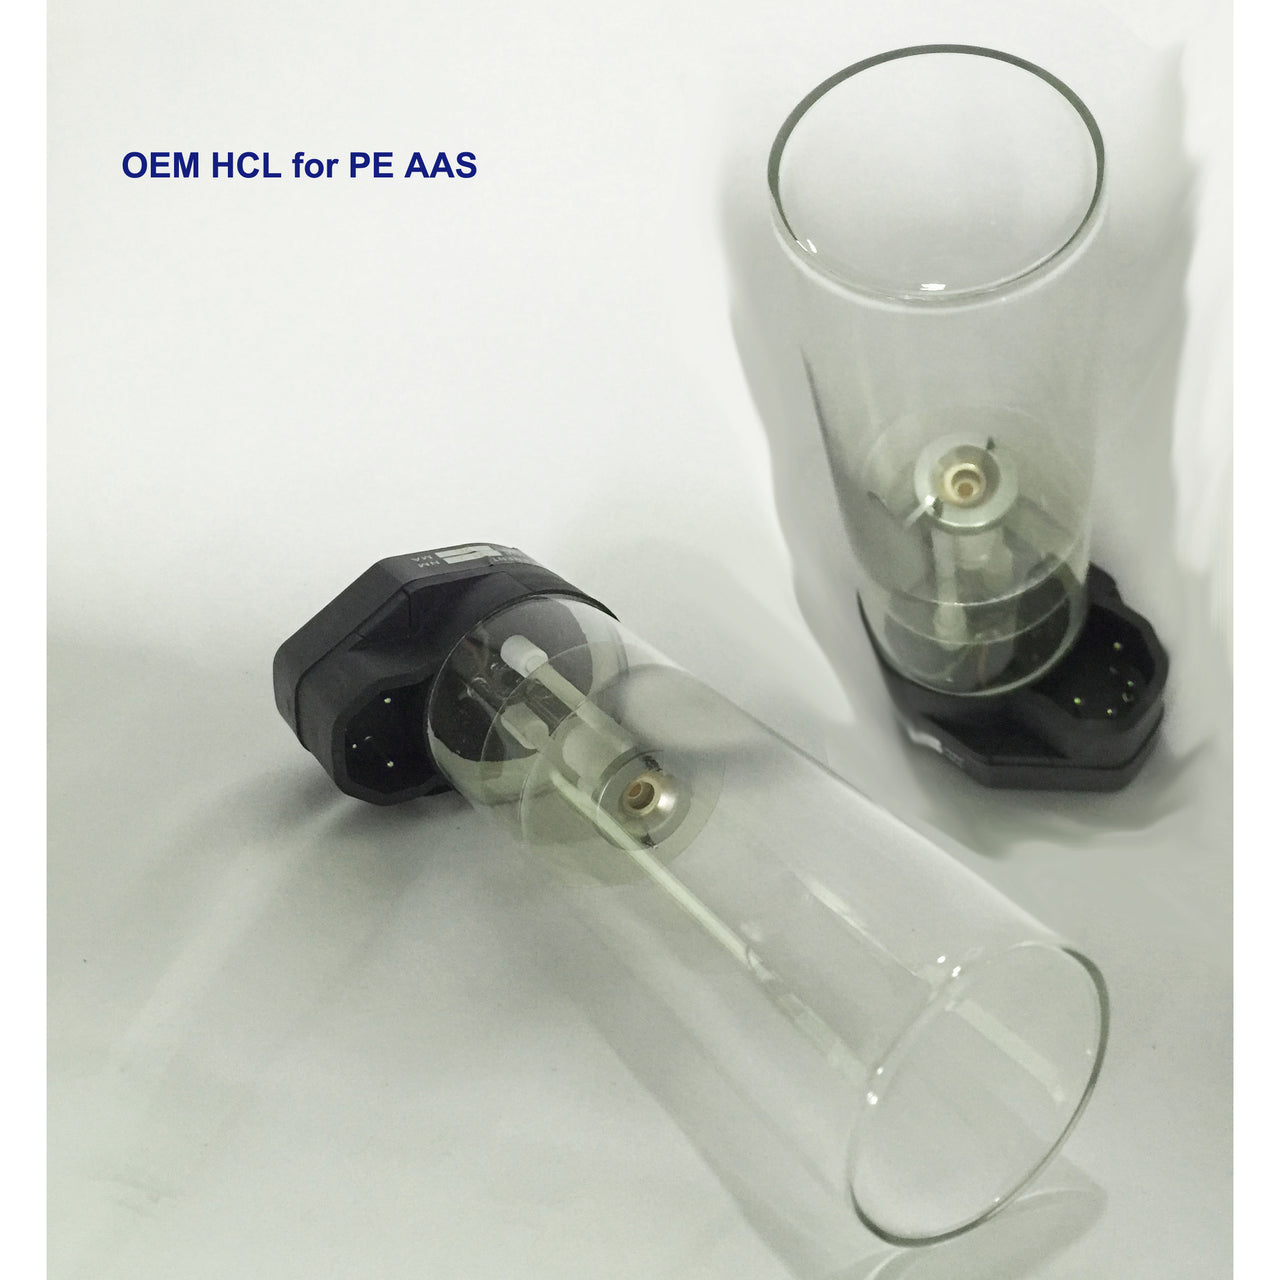 Hollow Cathode Lamp, Dysprosium - Dy